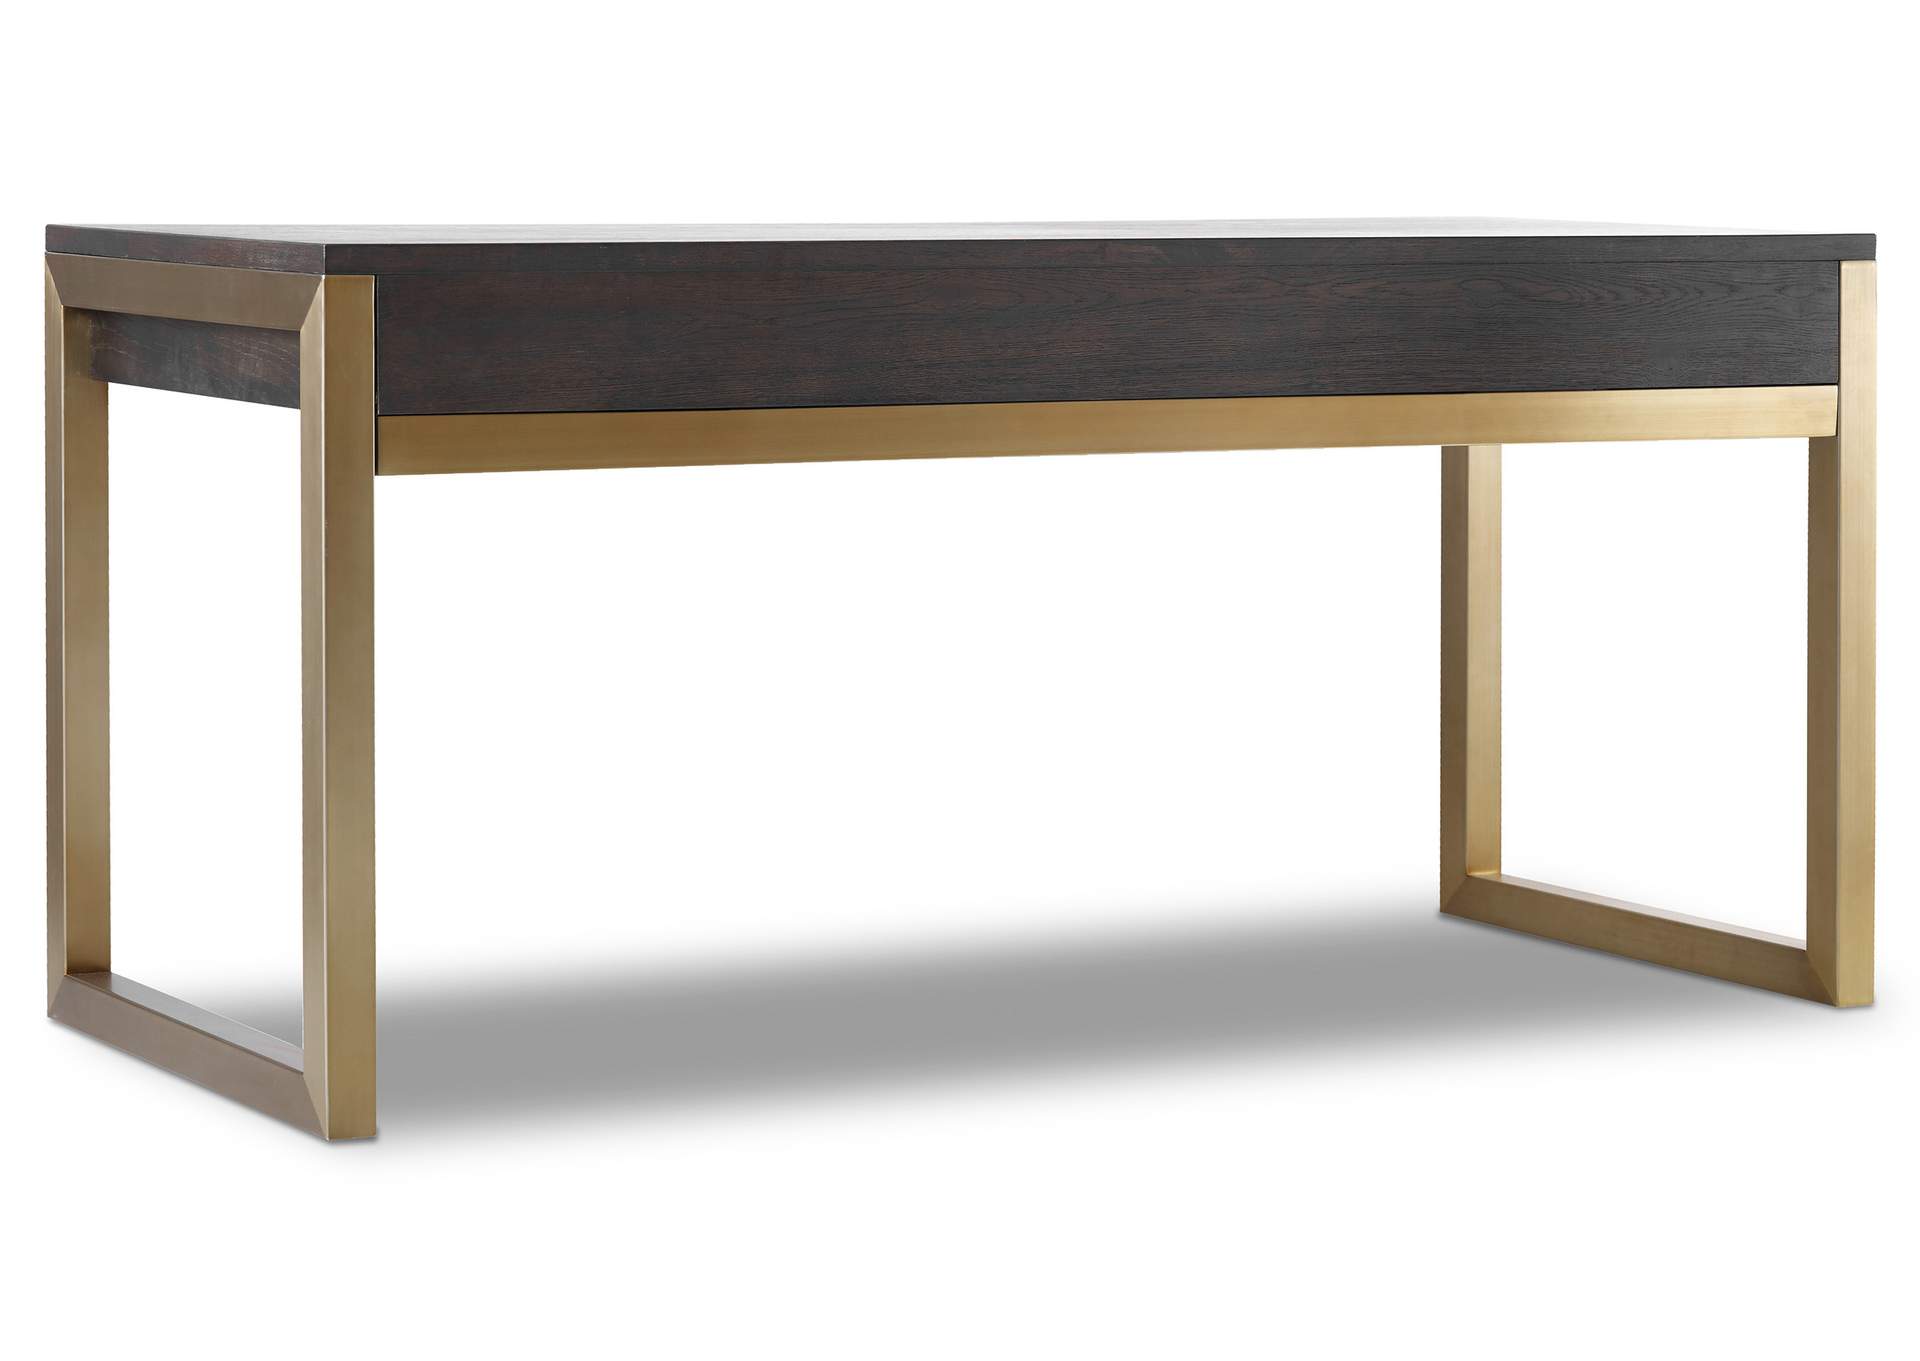 Curata Short Left - Right - Freestanding Desk,Hooker Furniture